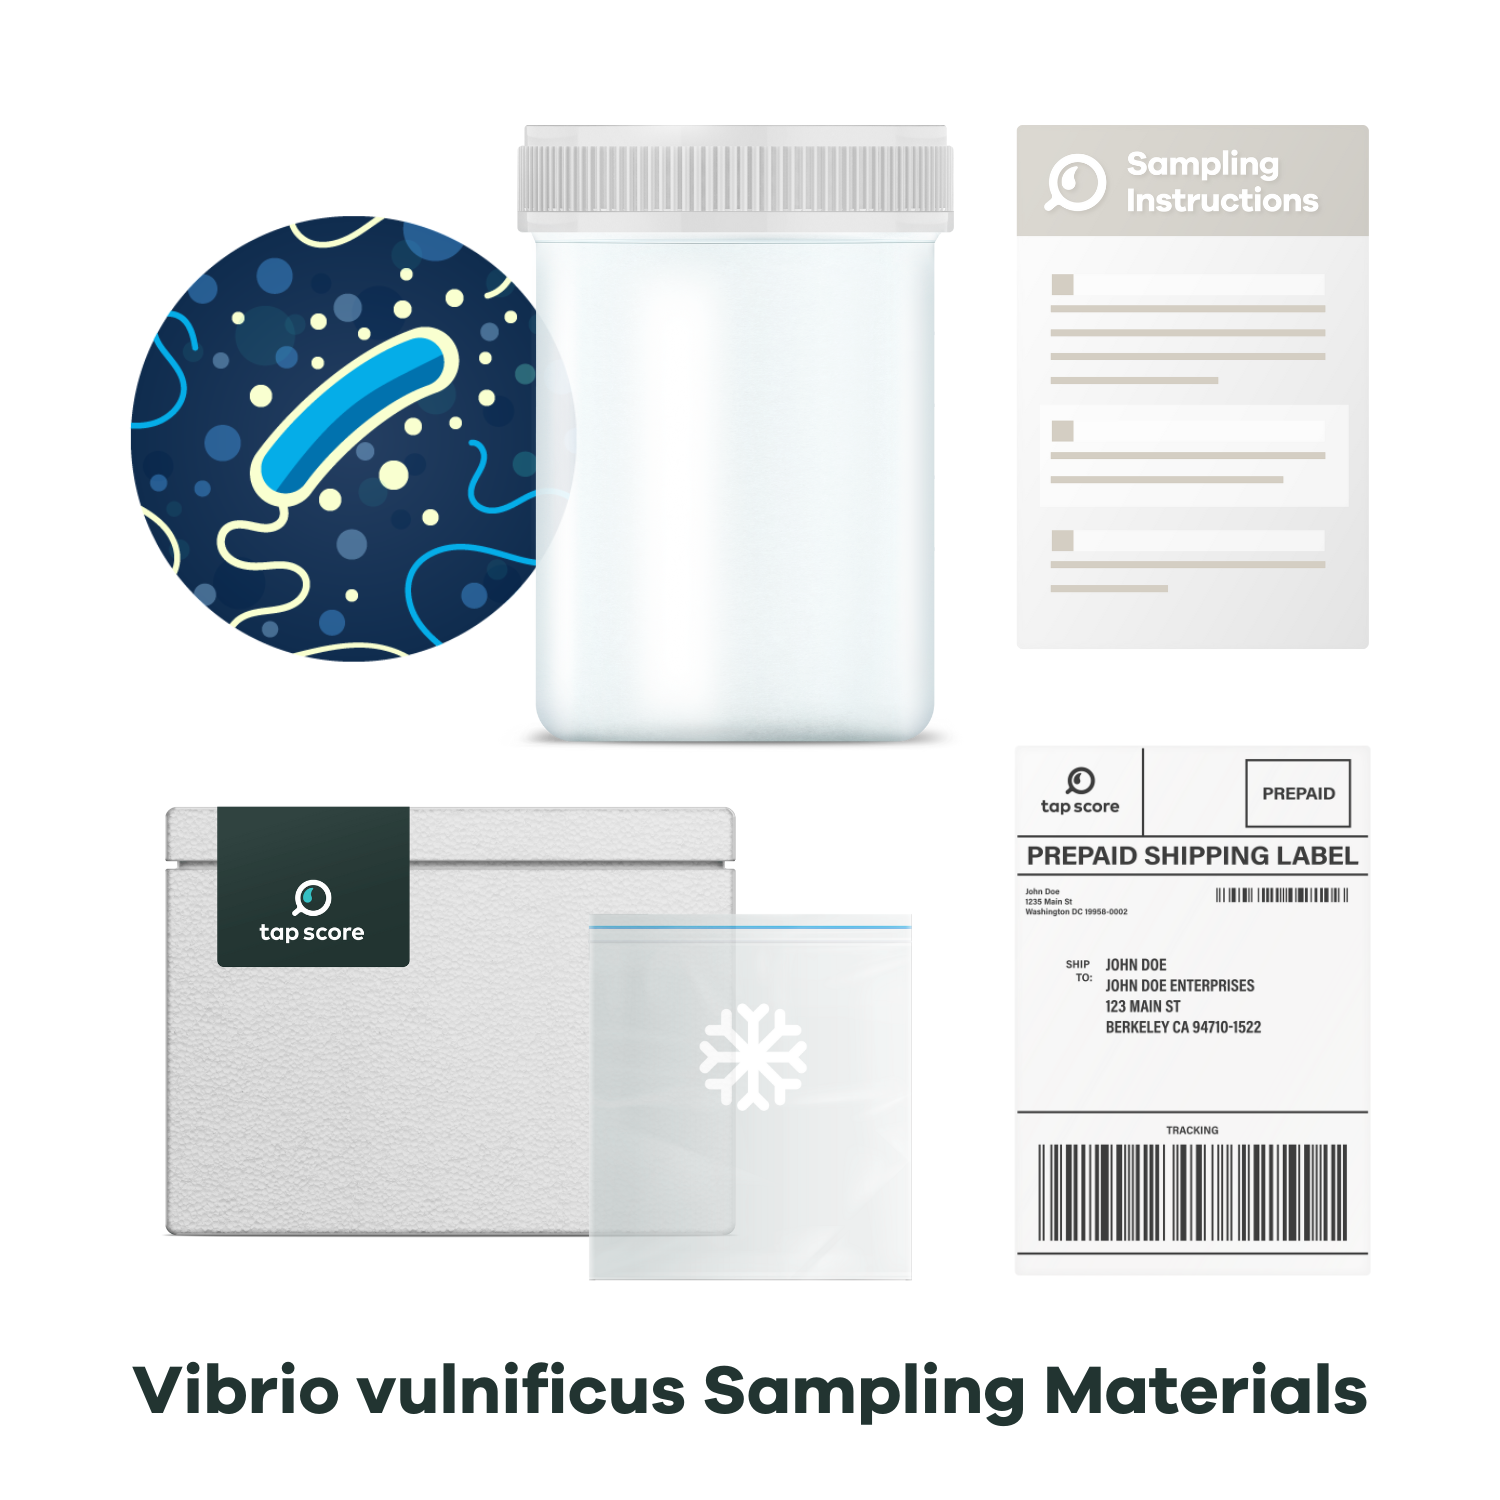 Vibrio vulnificus Sampling Materials for Lab Analysis Test Kit